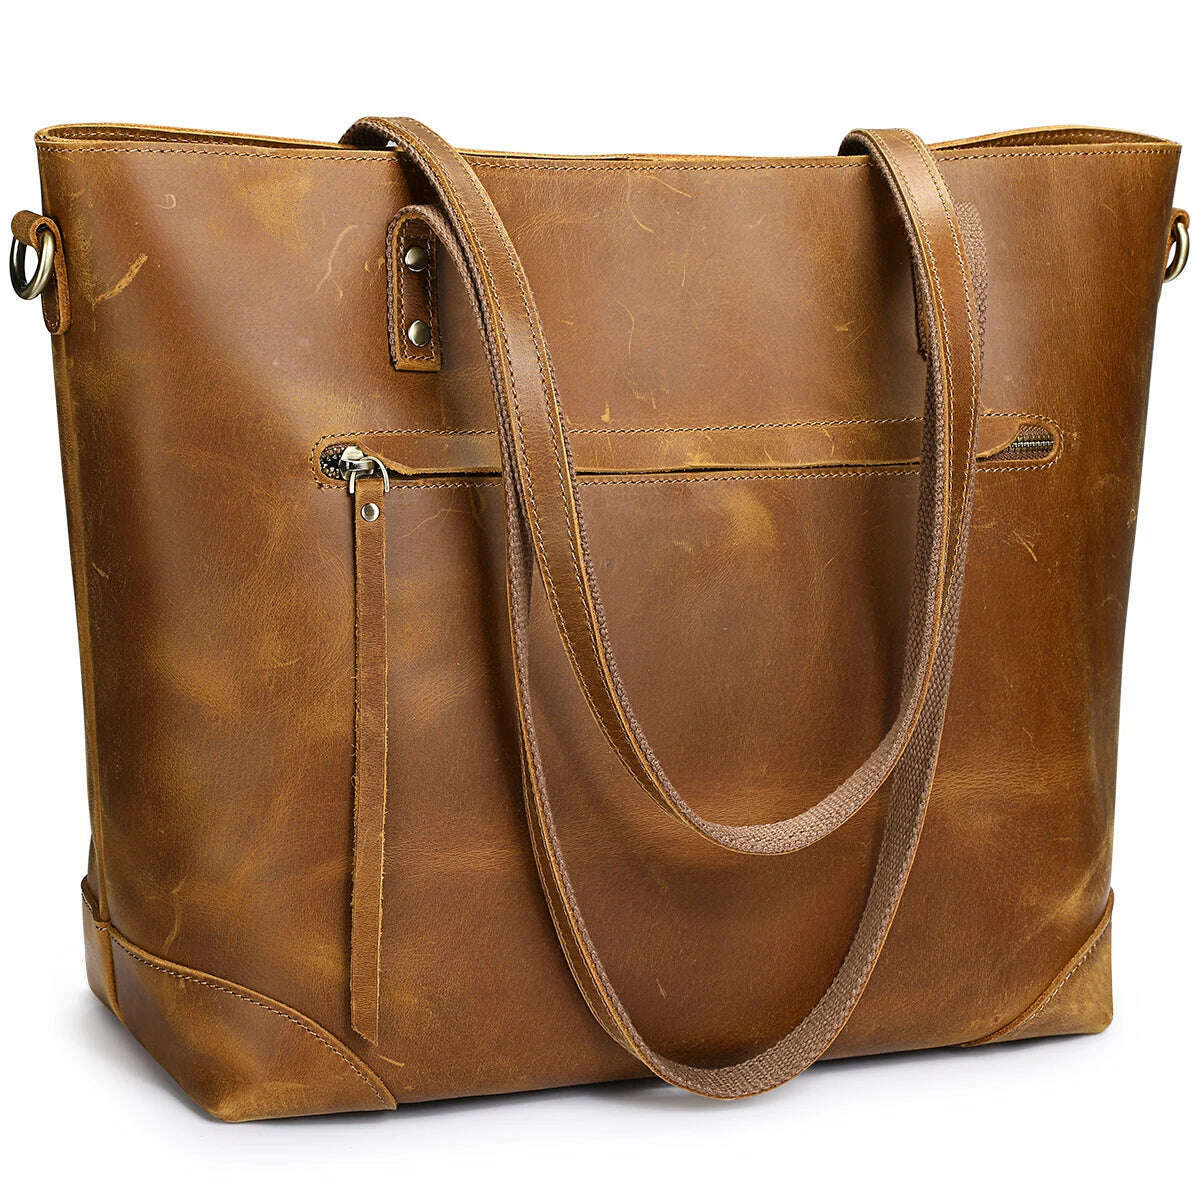 KIMLUD, S-ZONE Vintage Genuine Leather Shoulder Bag Work Totes for Women Purse Handbag with Back Zipper Pocket Large, KIMLUD Womens Clothes